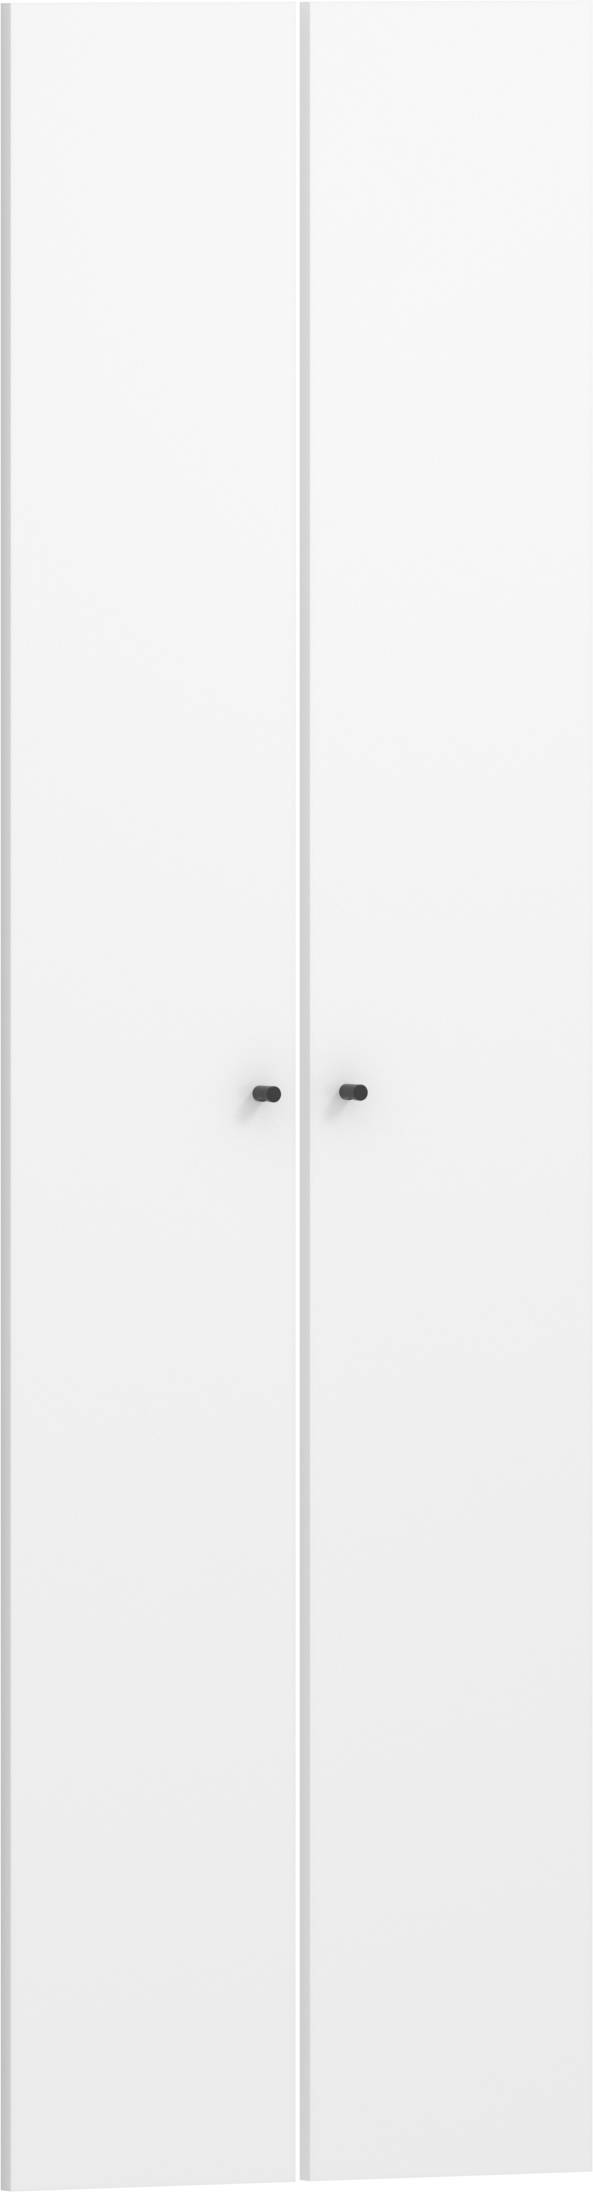 Pack 2 puertas abatibles para módulo spaceo home blanca 60(2x30cm)x200cm